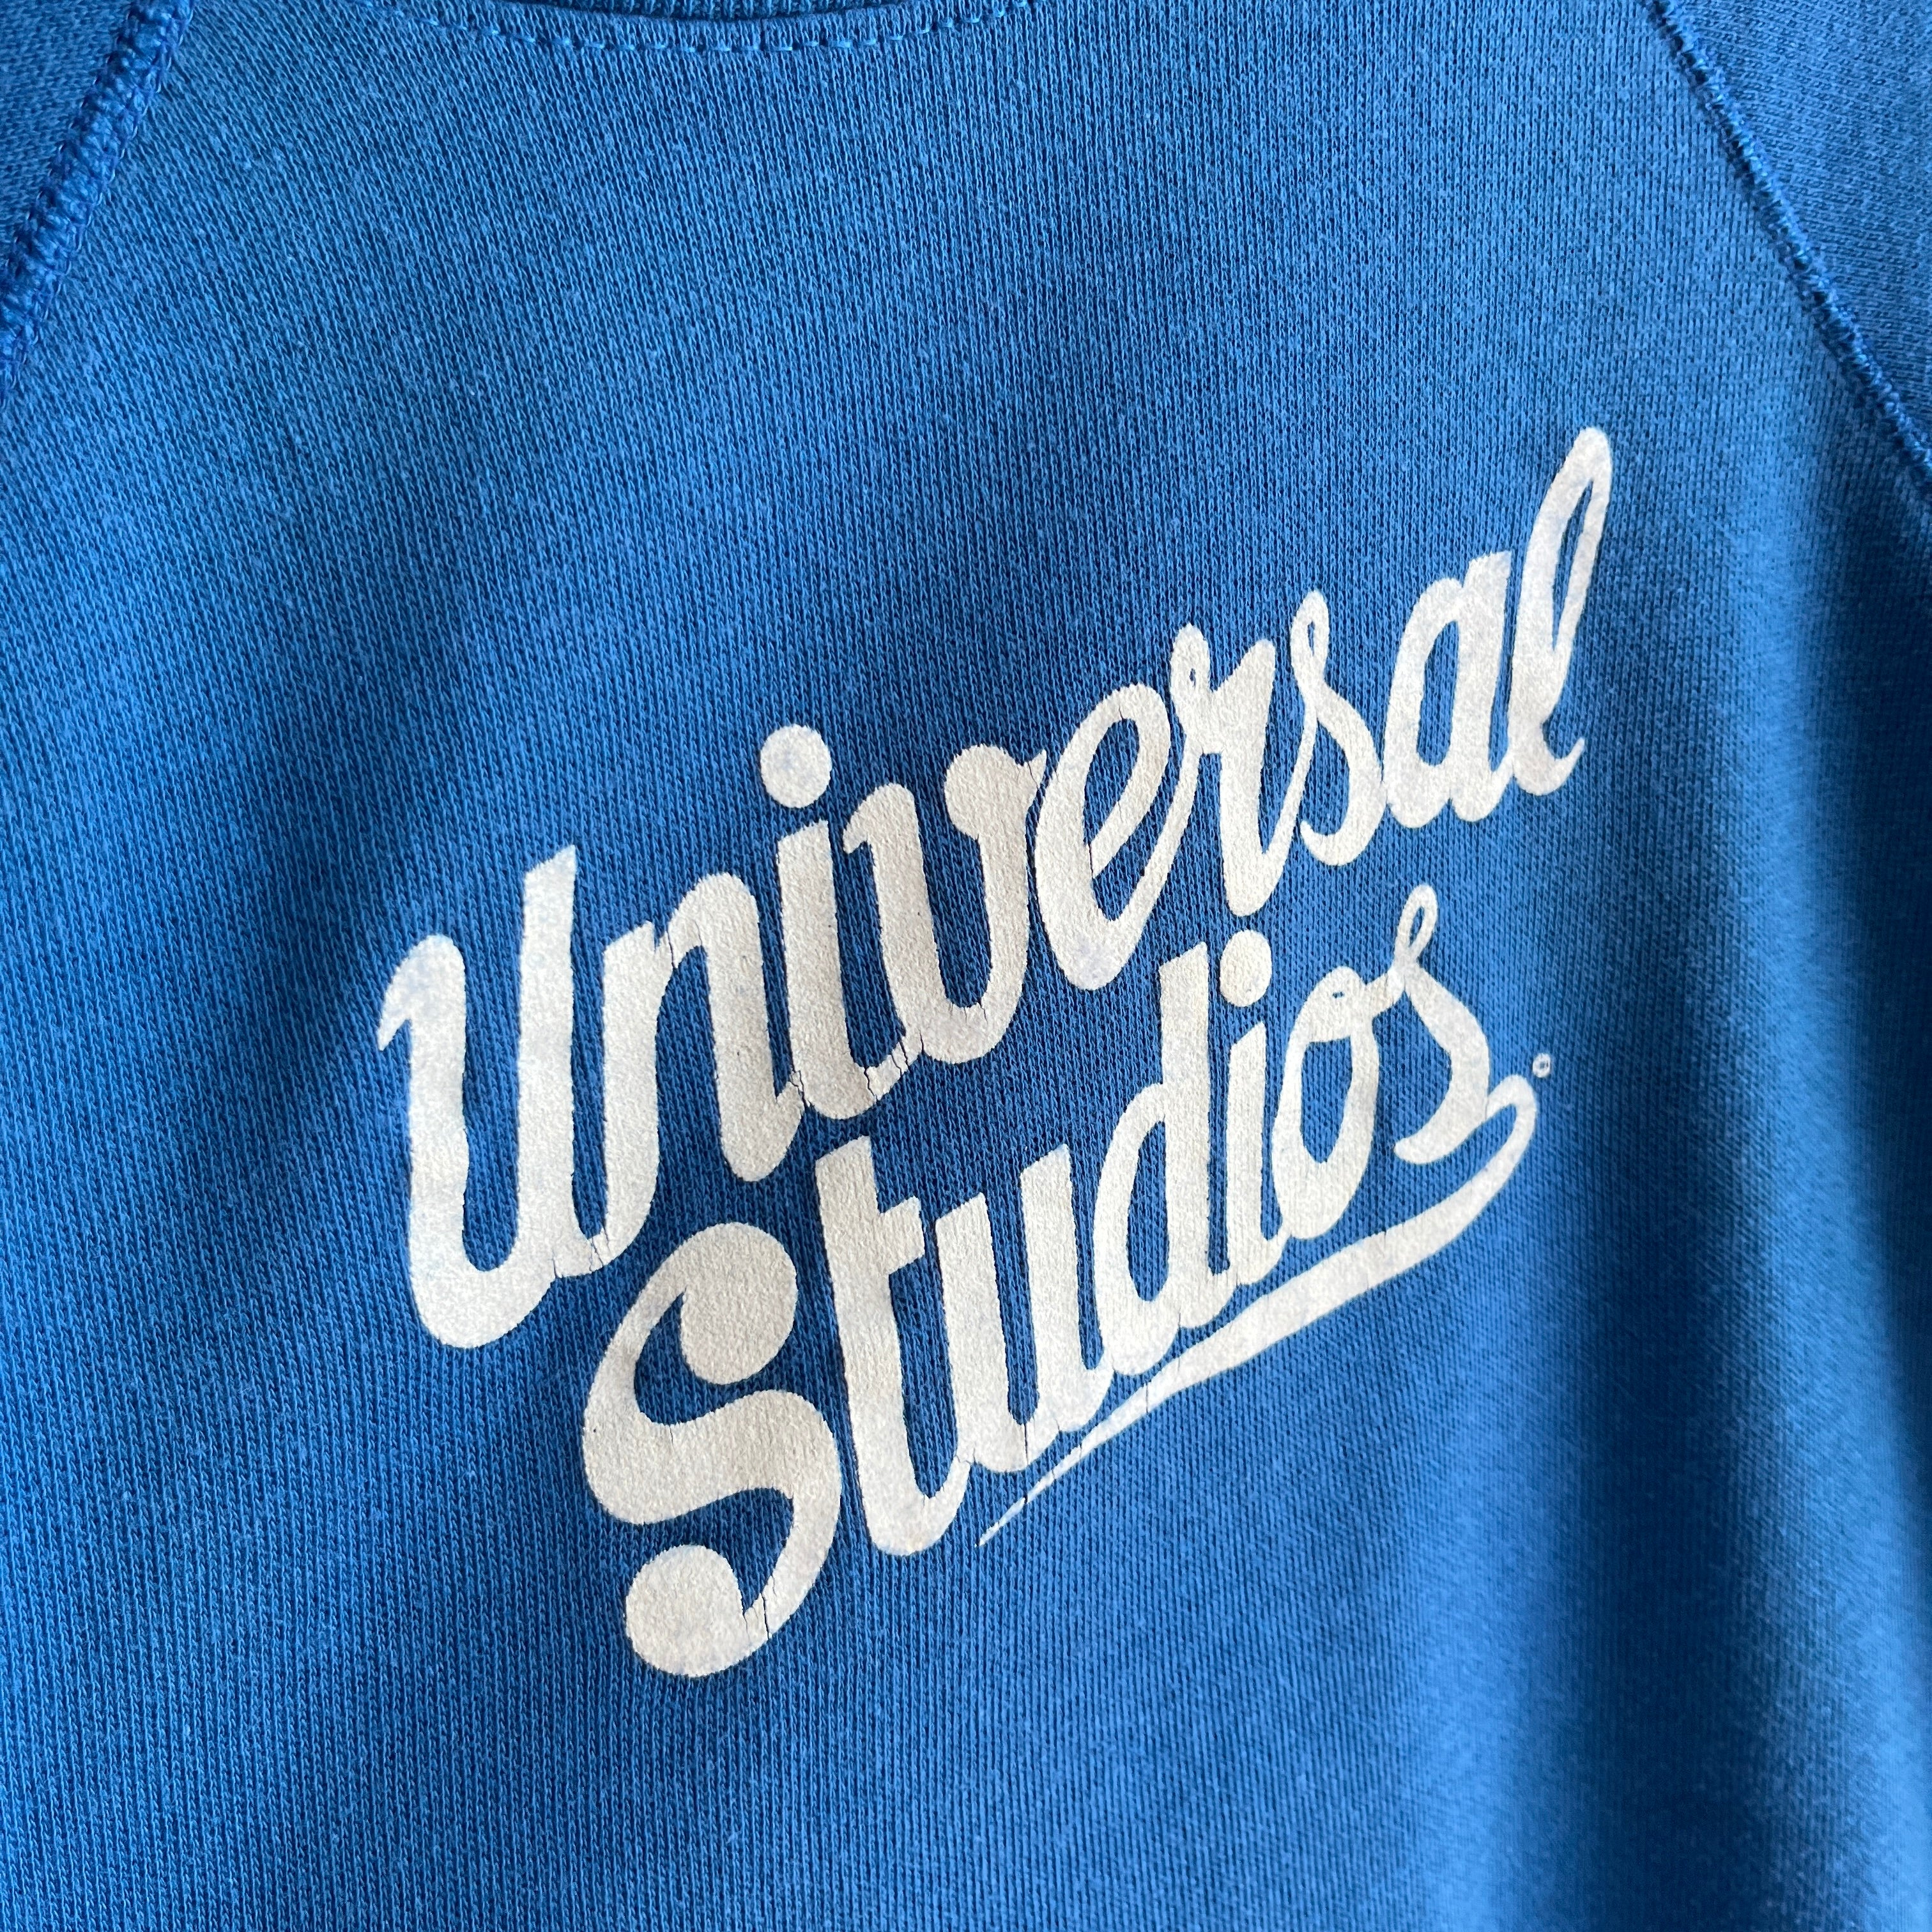 1970/80s Universal Studios Sweatshirt